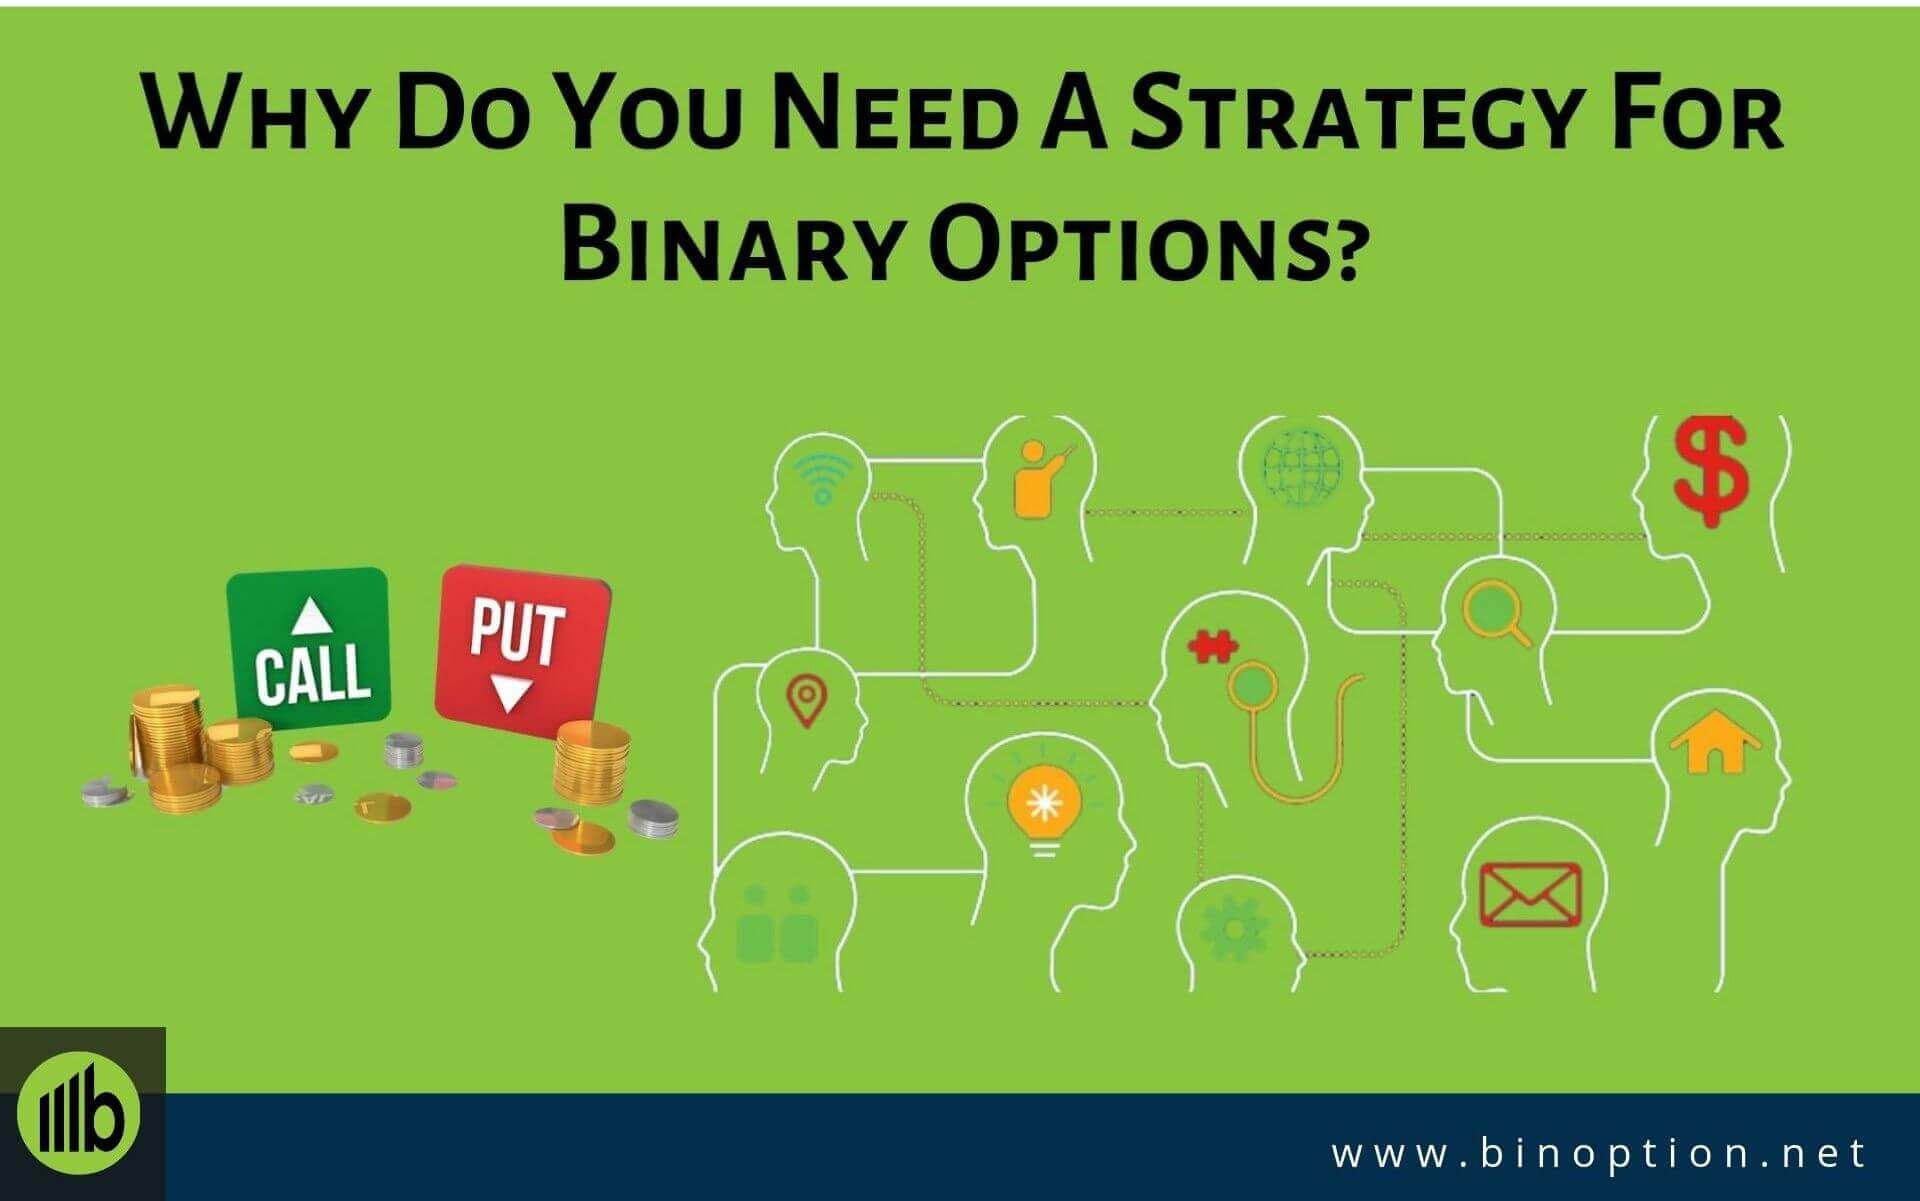 Need a simple binary options strategy